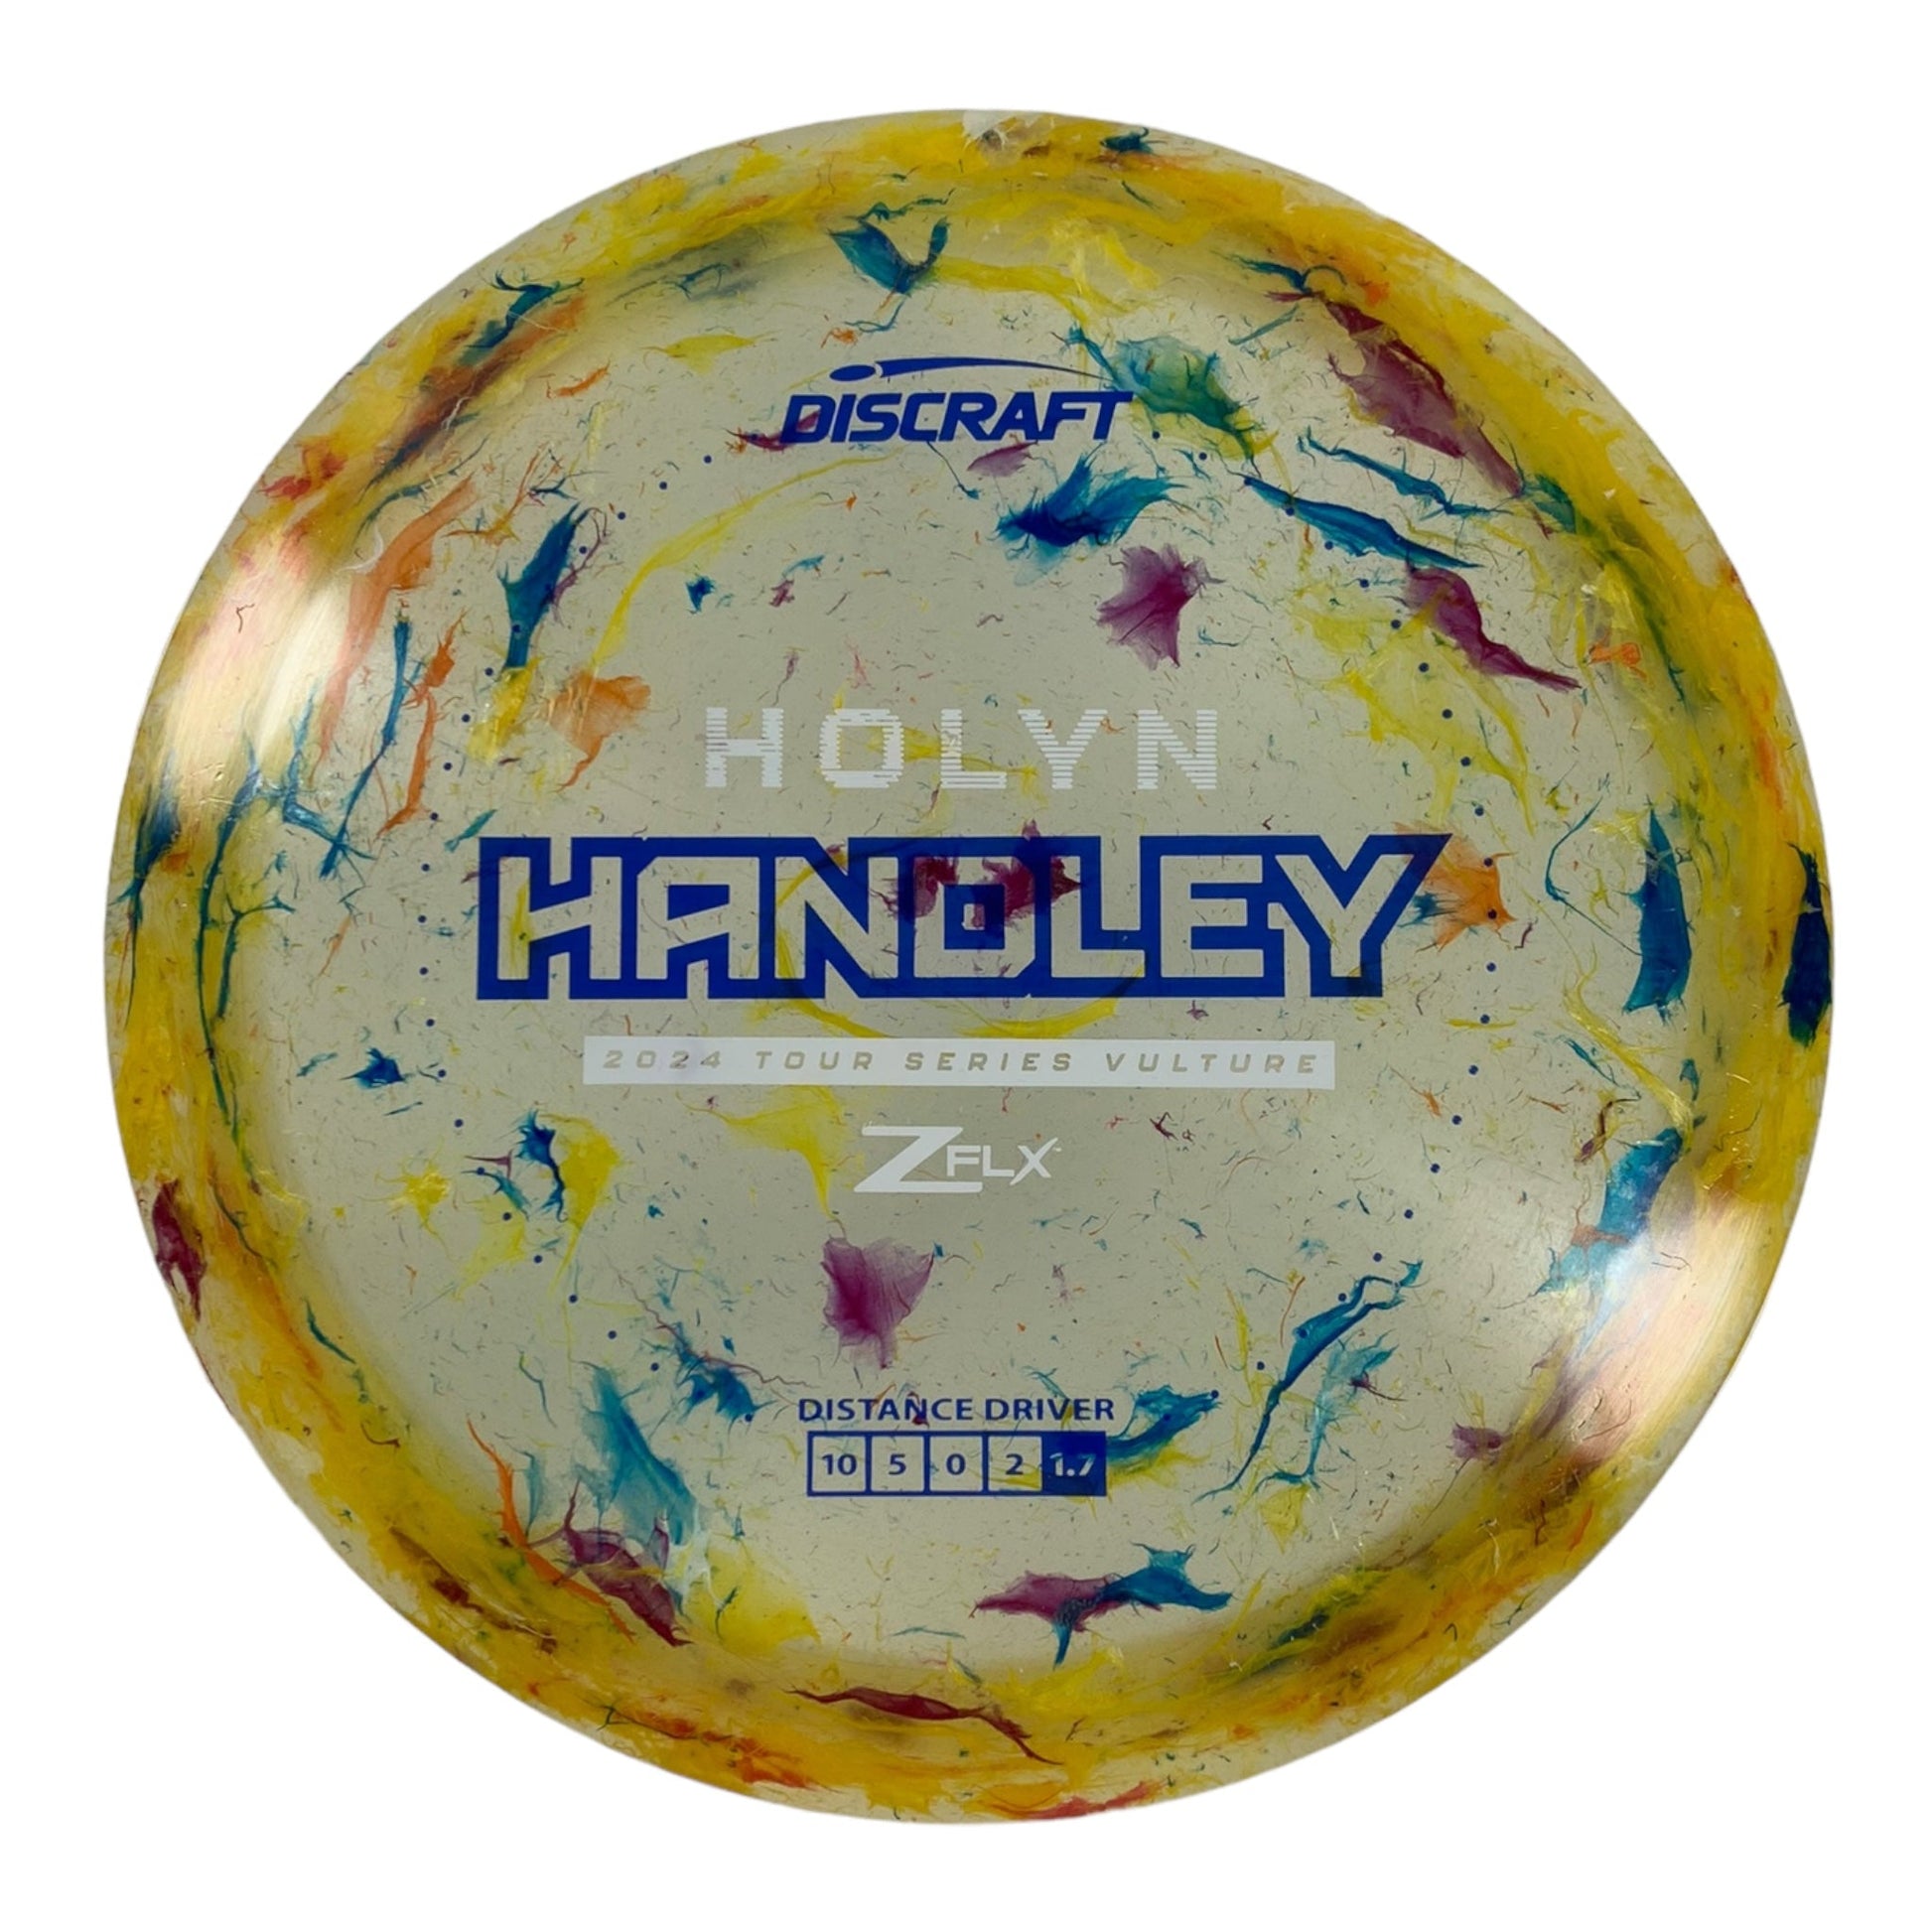 Discraft Vulture | Jawbreaker Z FLX | Yellow/Blue 174g (Holyn Handley) Disc Golf